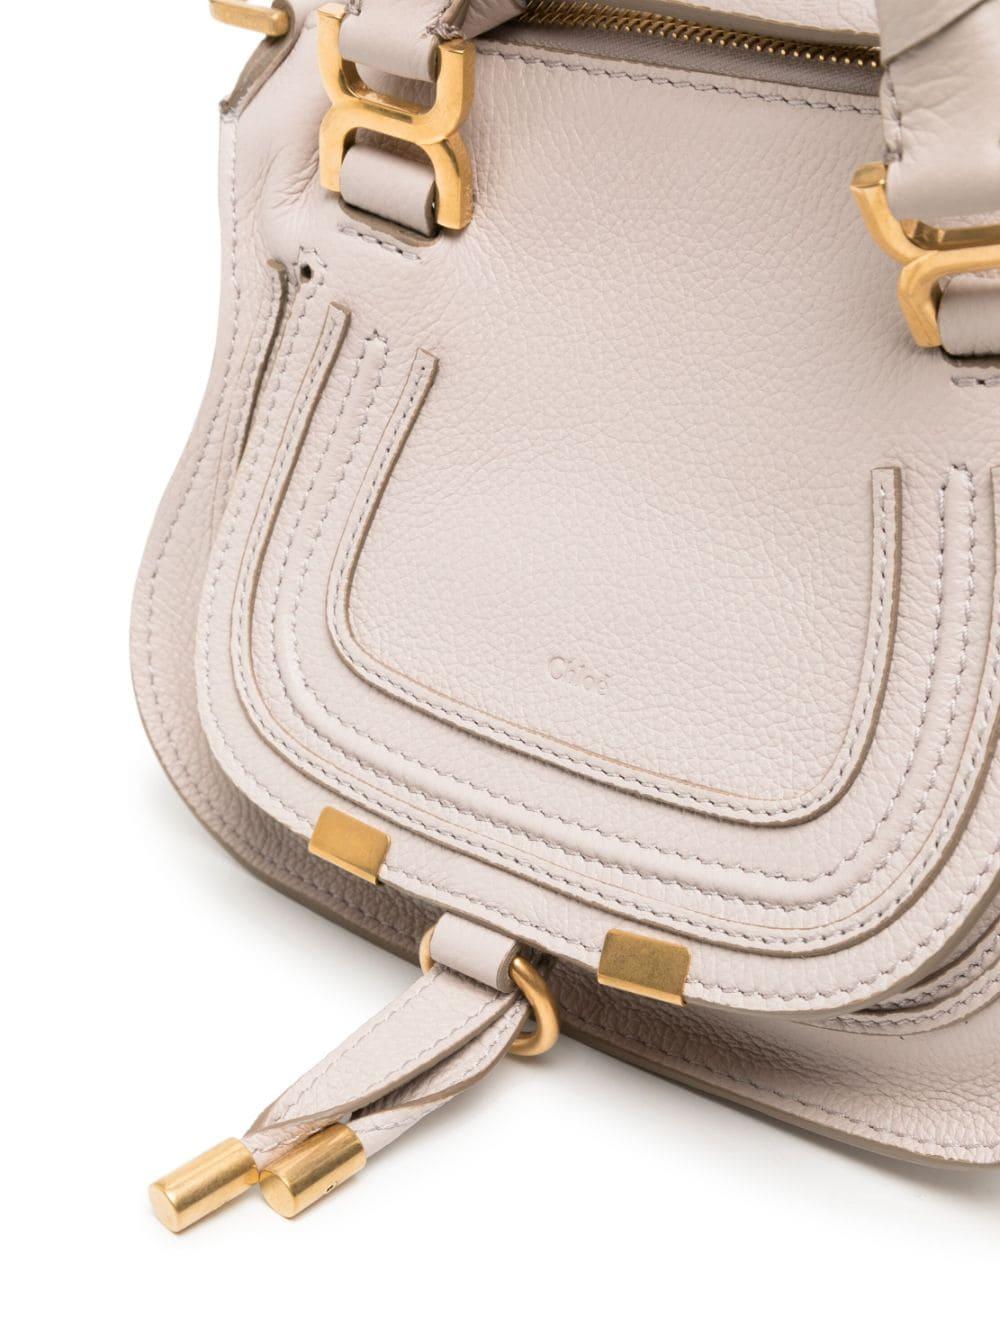 Marcie Small Leather Crossbody Bag in White - Chloe